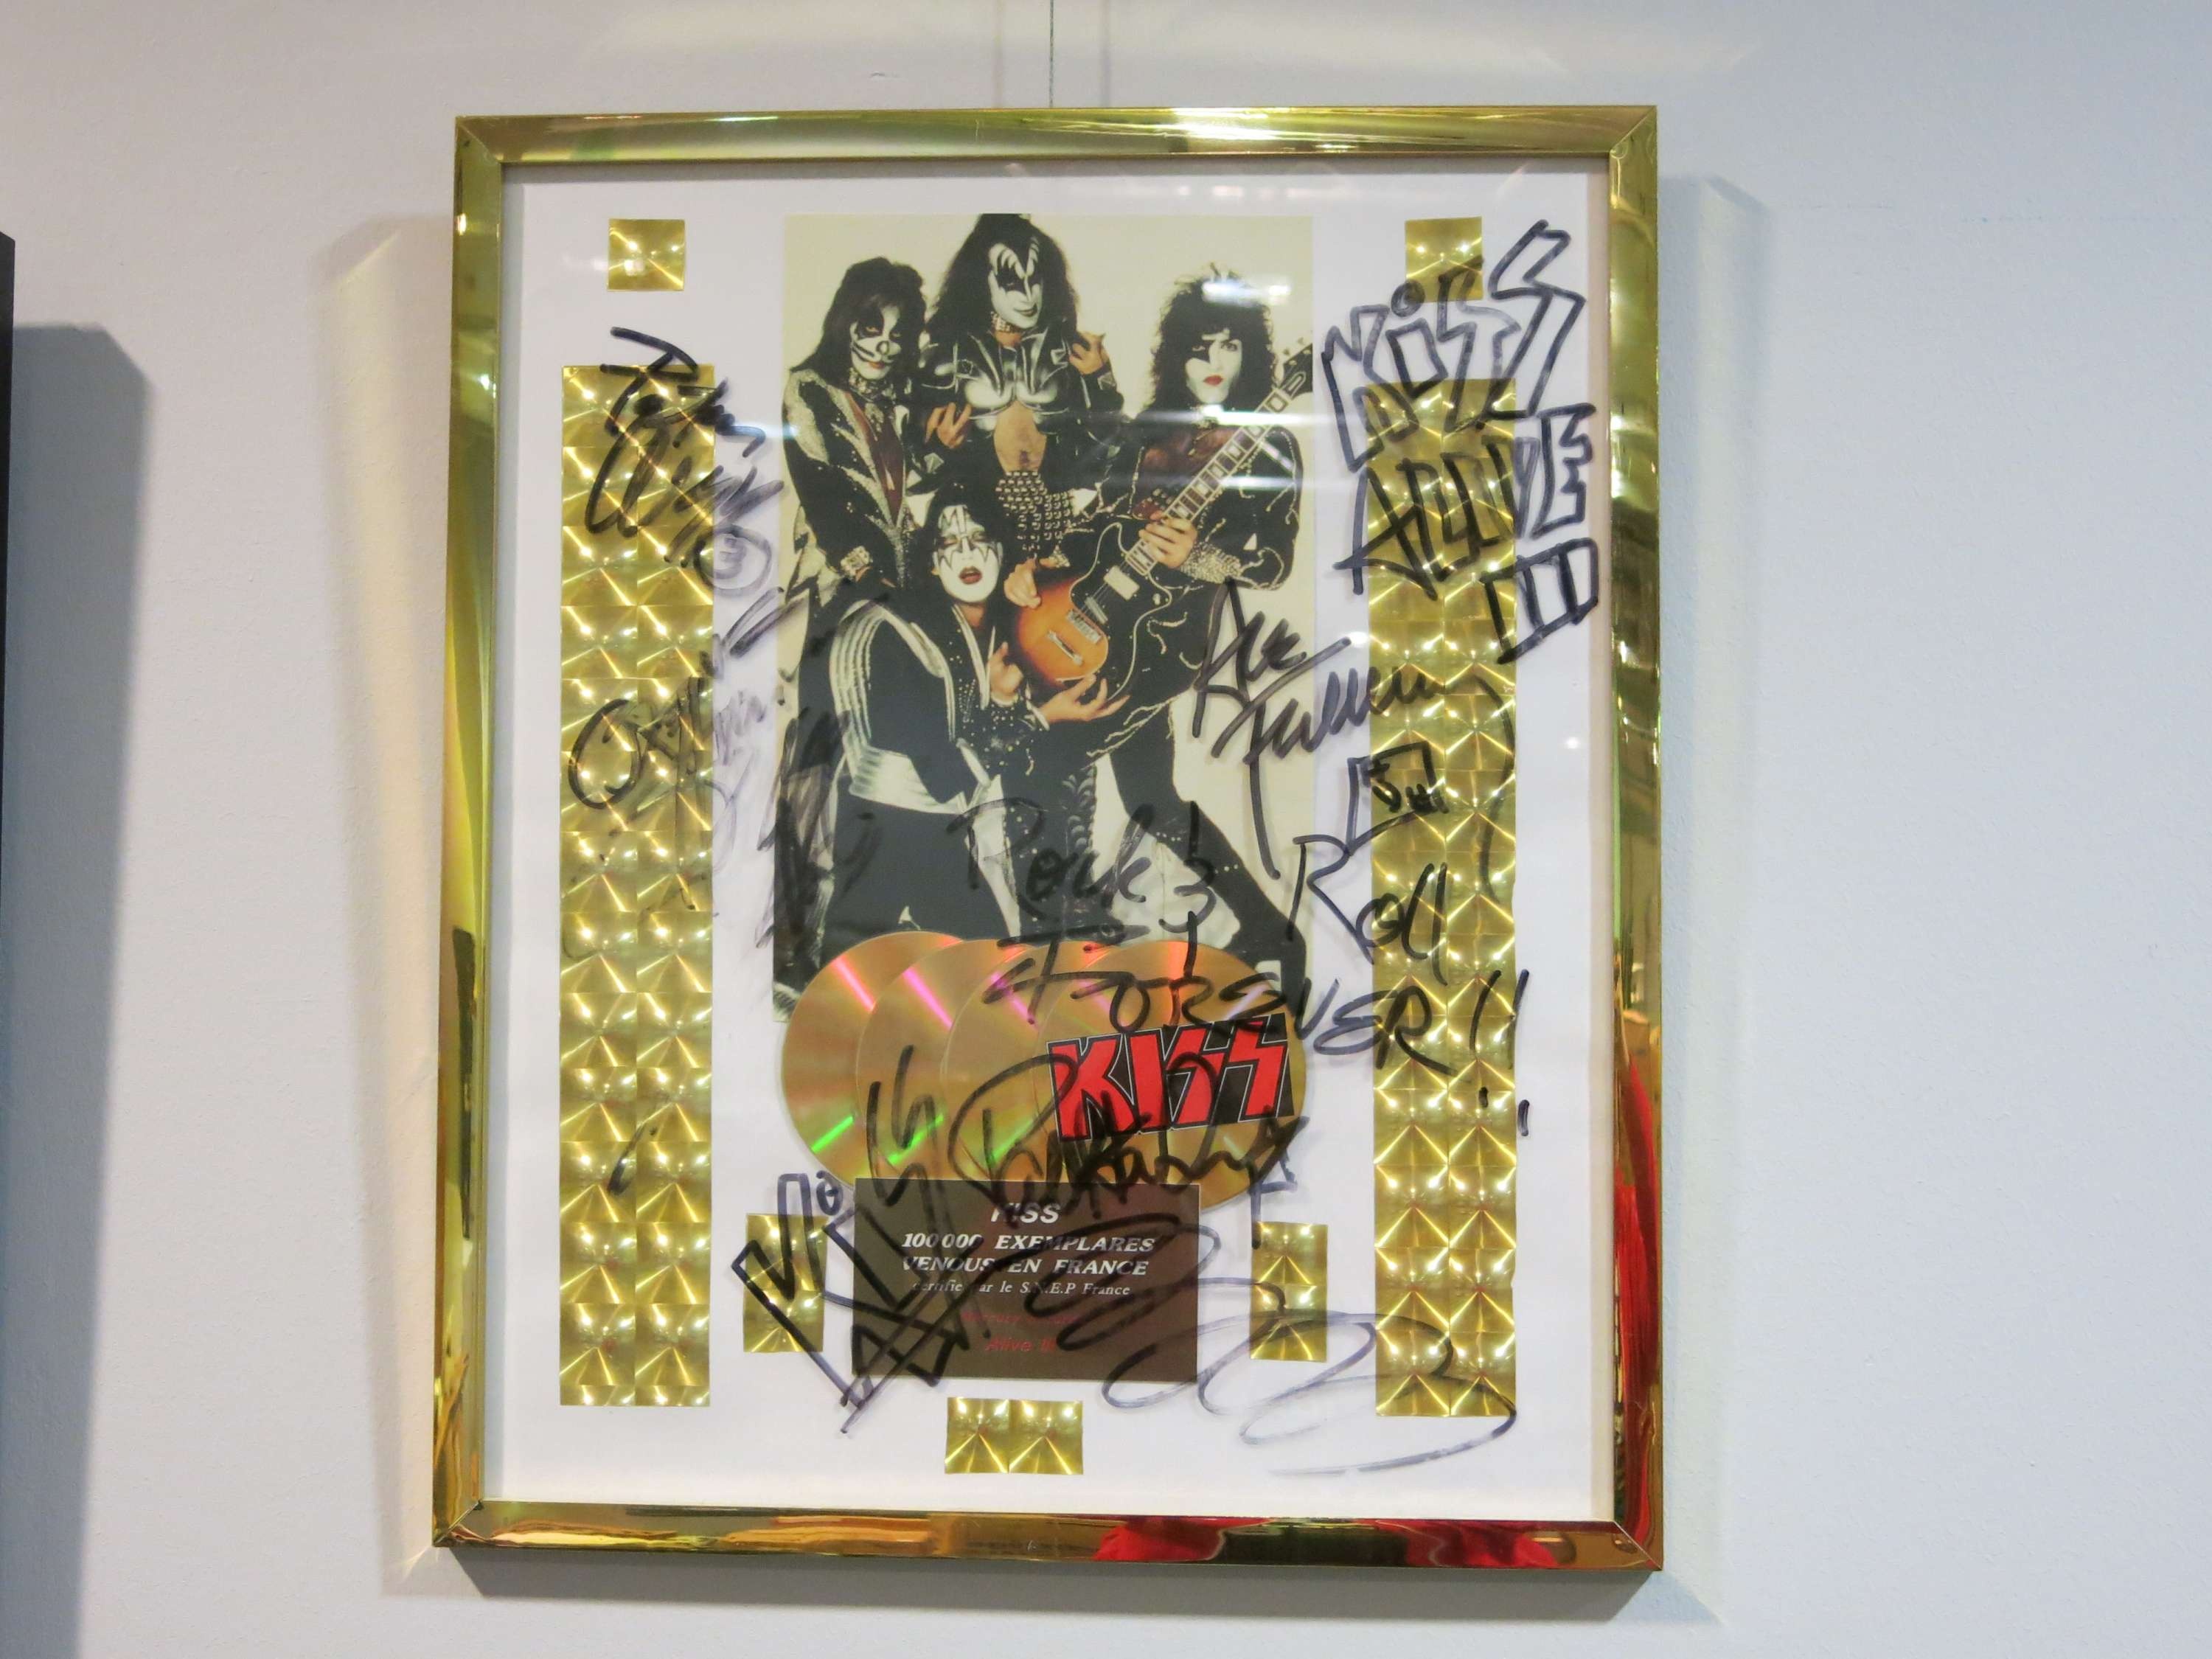 Goldene Schallplatte "Alive III" (rock ’n’ popmuseum CC BY-NC-SA)